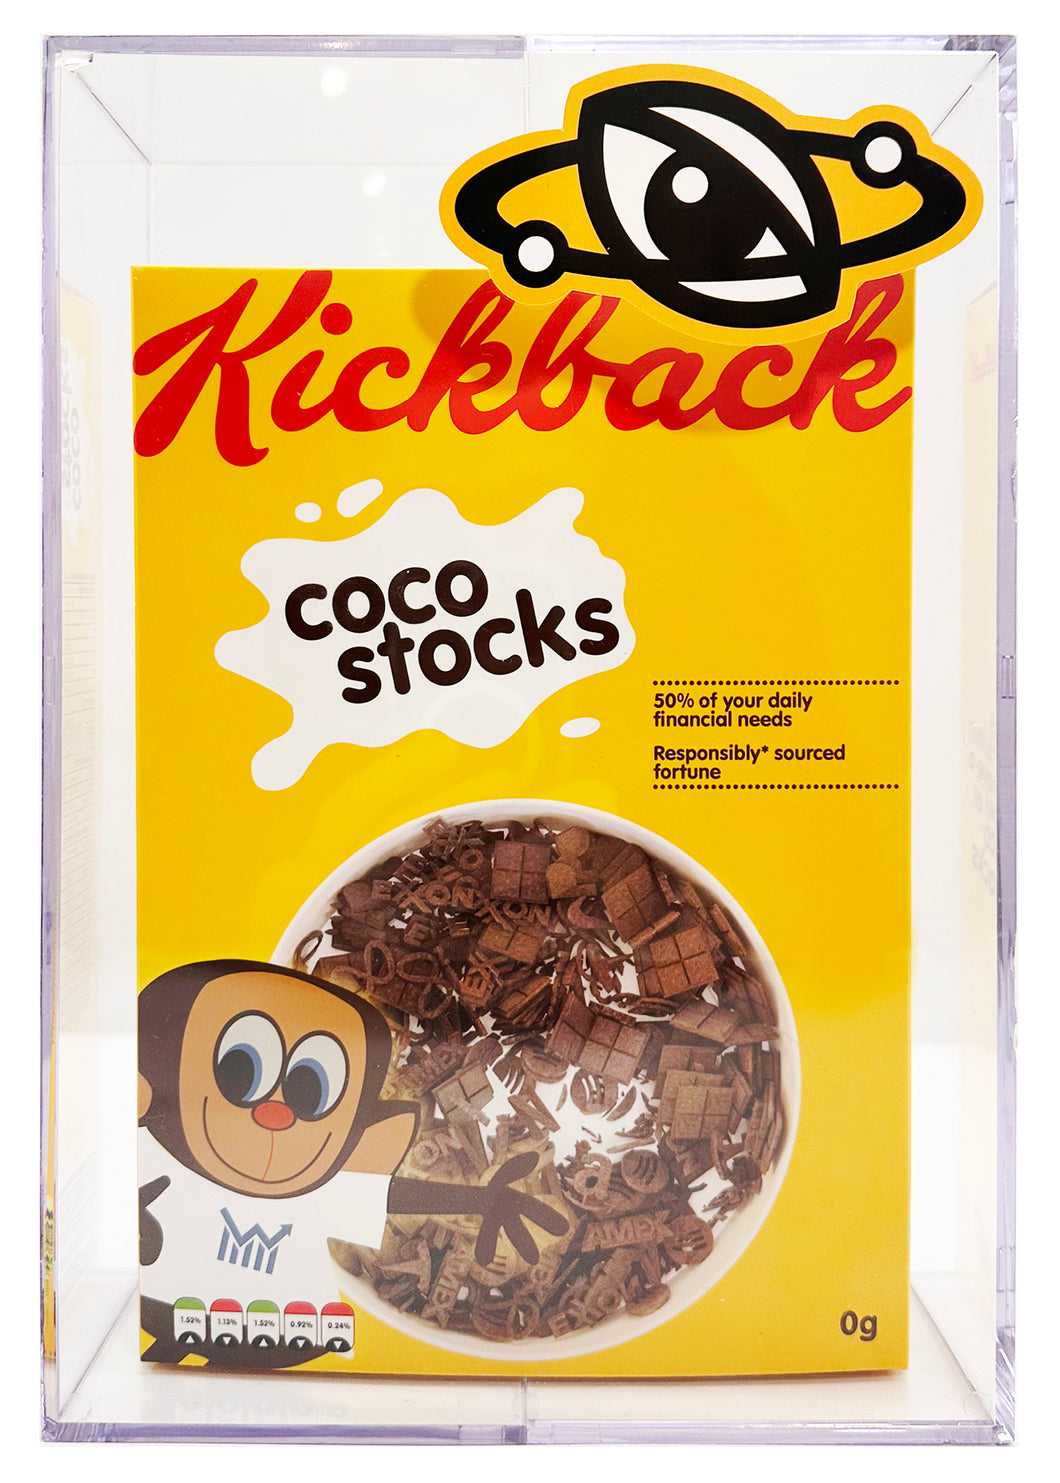 IMBUE 'Death + Taxes: You Can't Eat Money' (2021) Kickback Coco Stocks Cereal Box + Display - Signari Gallery 